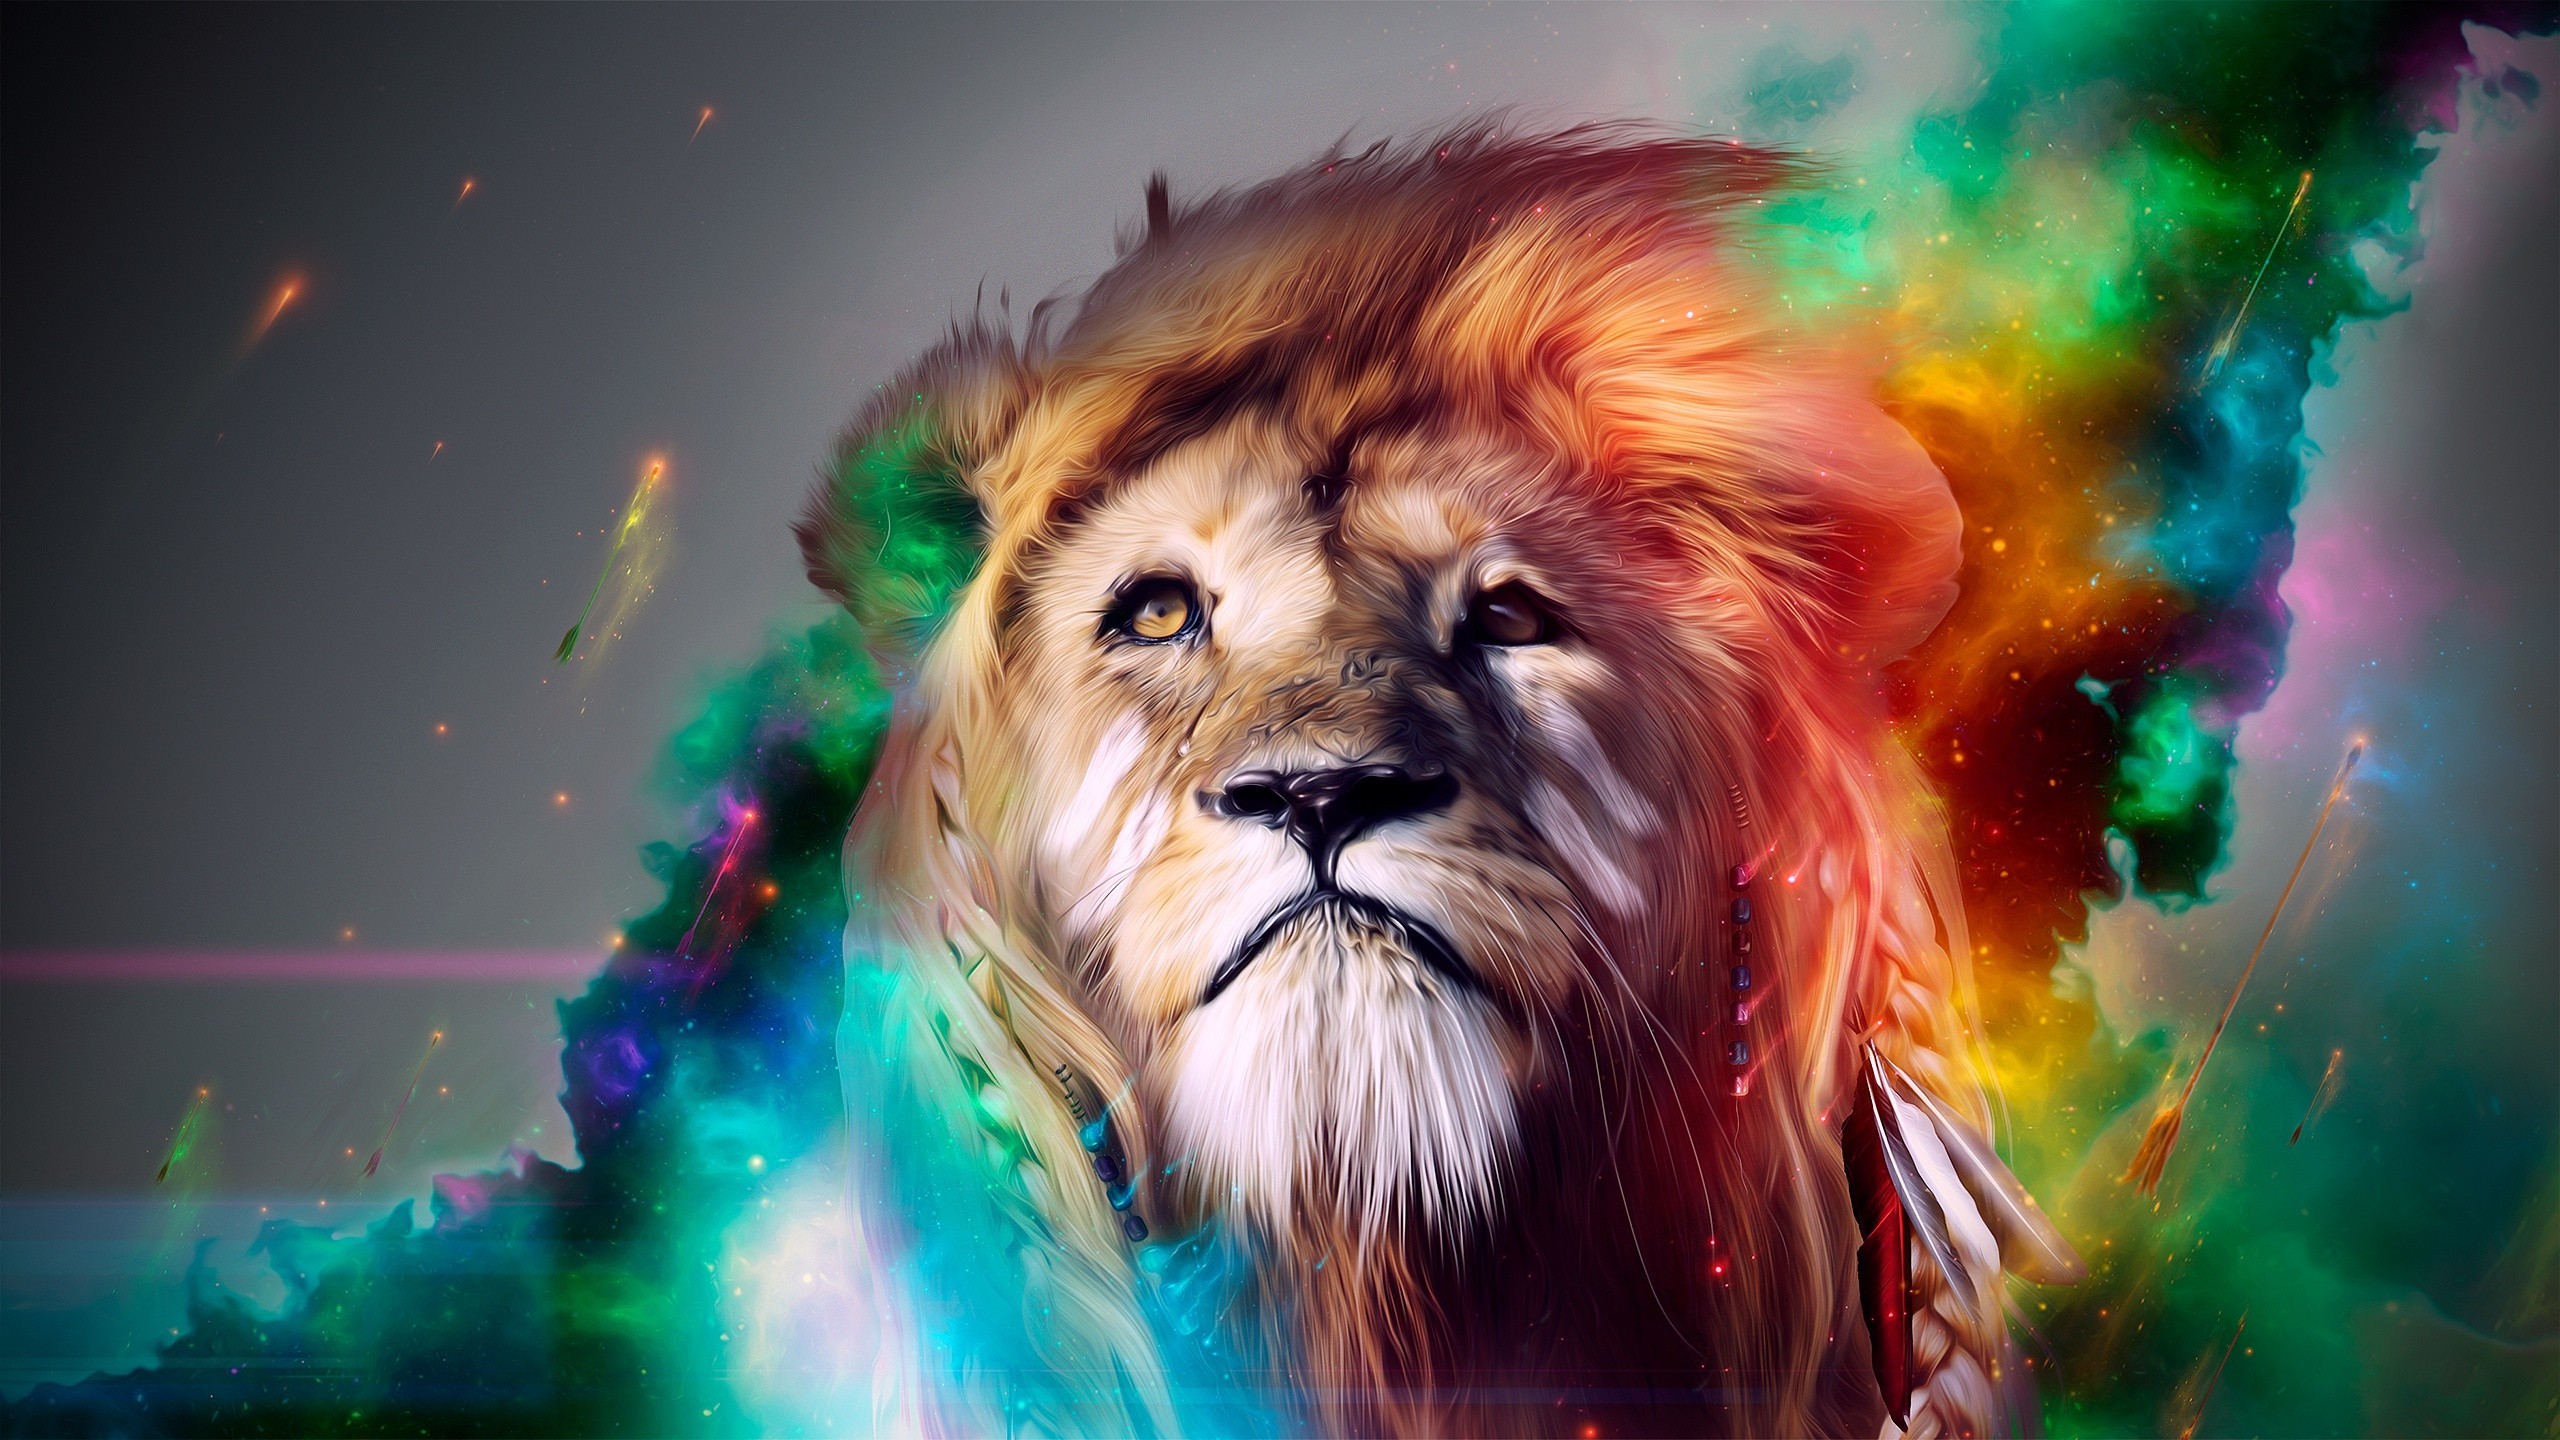 General 2560x1440 lion artwork colorful digital art mammals animals